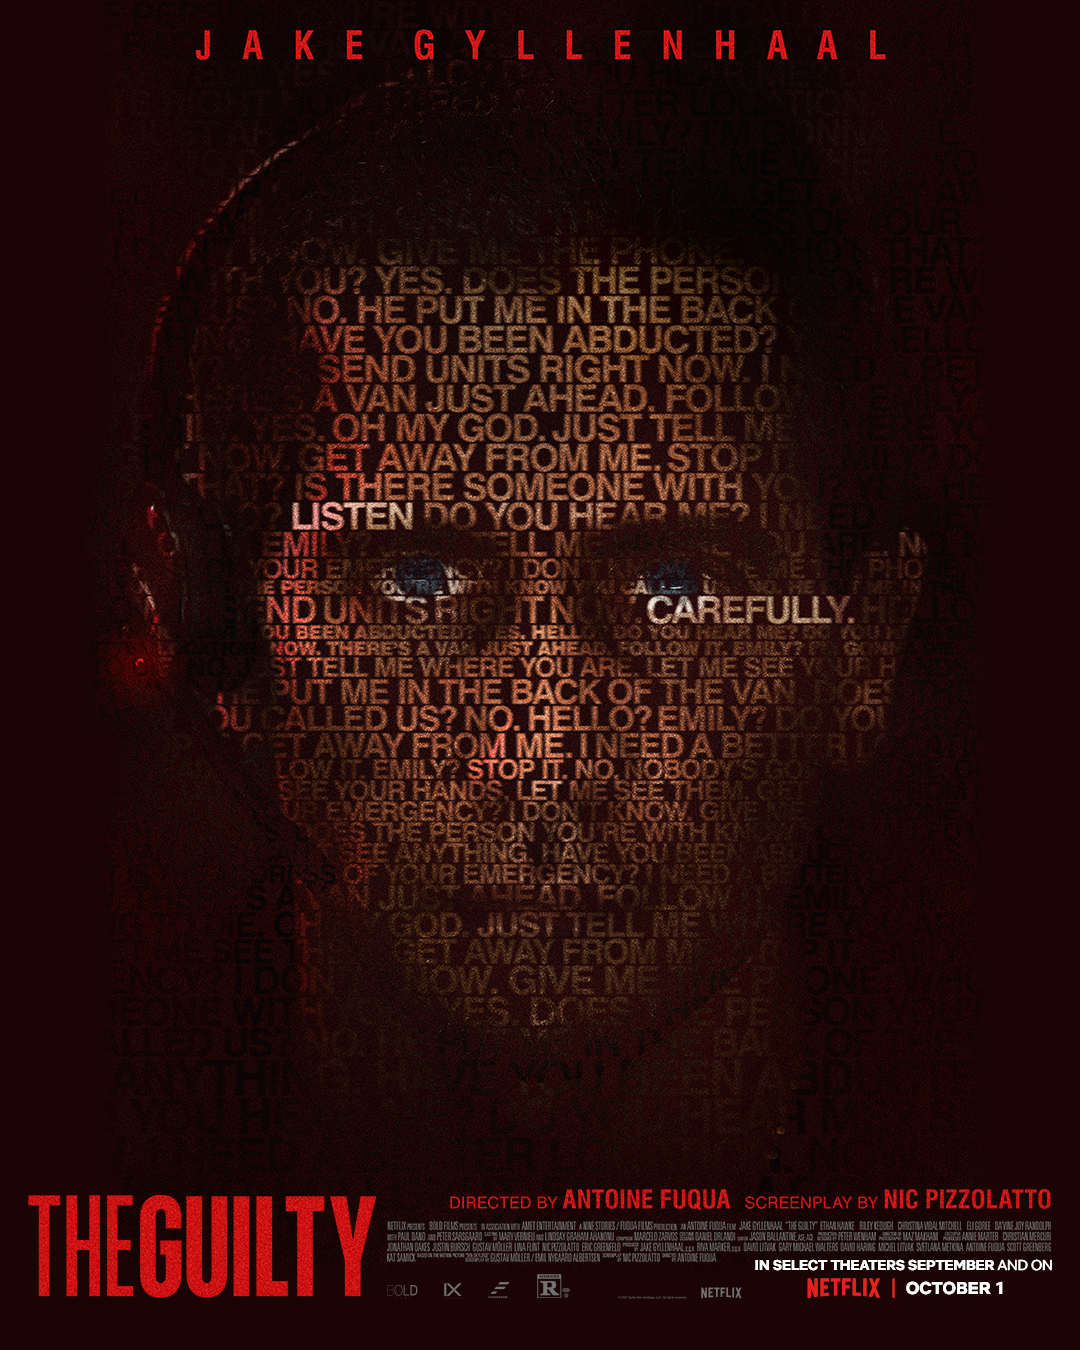 Netflix's The Guilty poster starring Jake Gyllenhaal